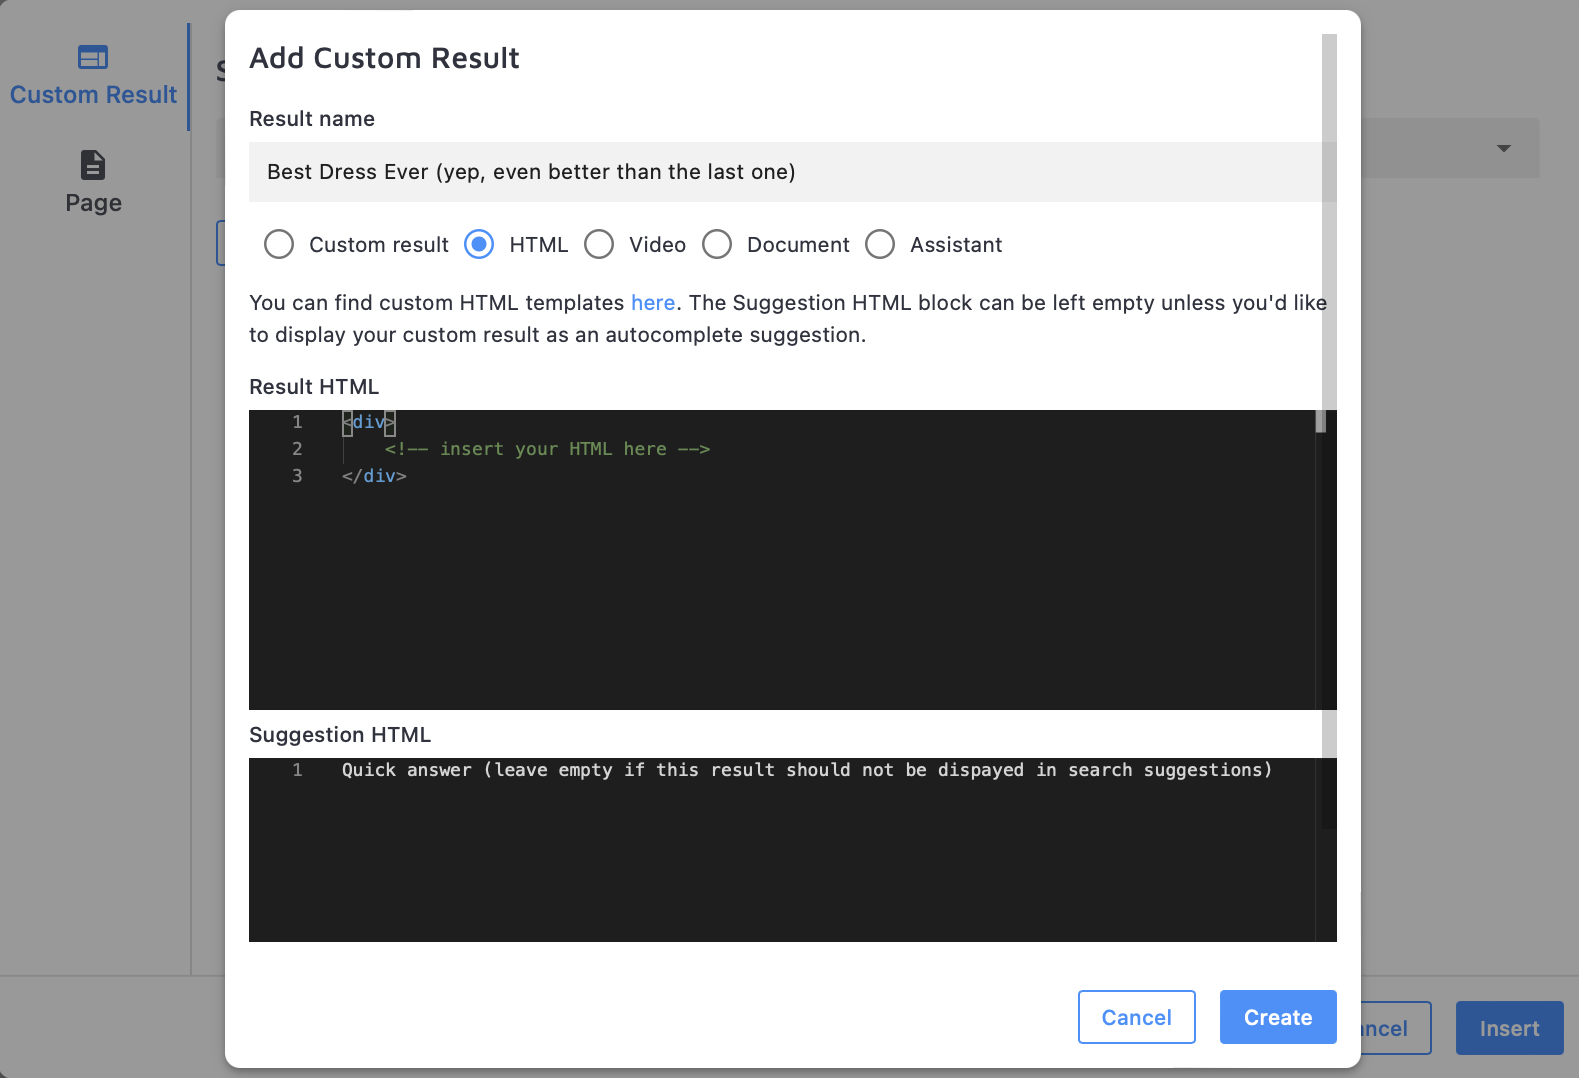 Adding custom results via HTML